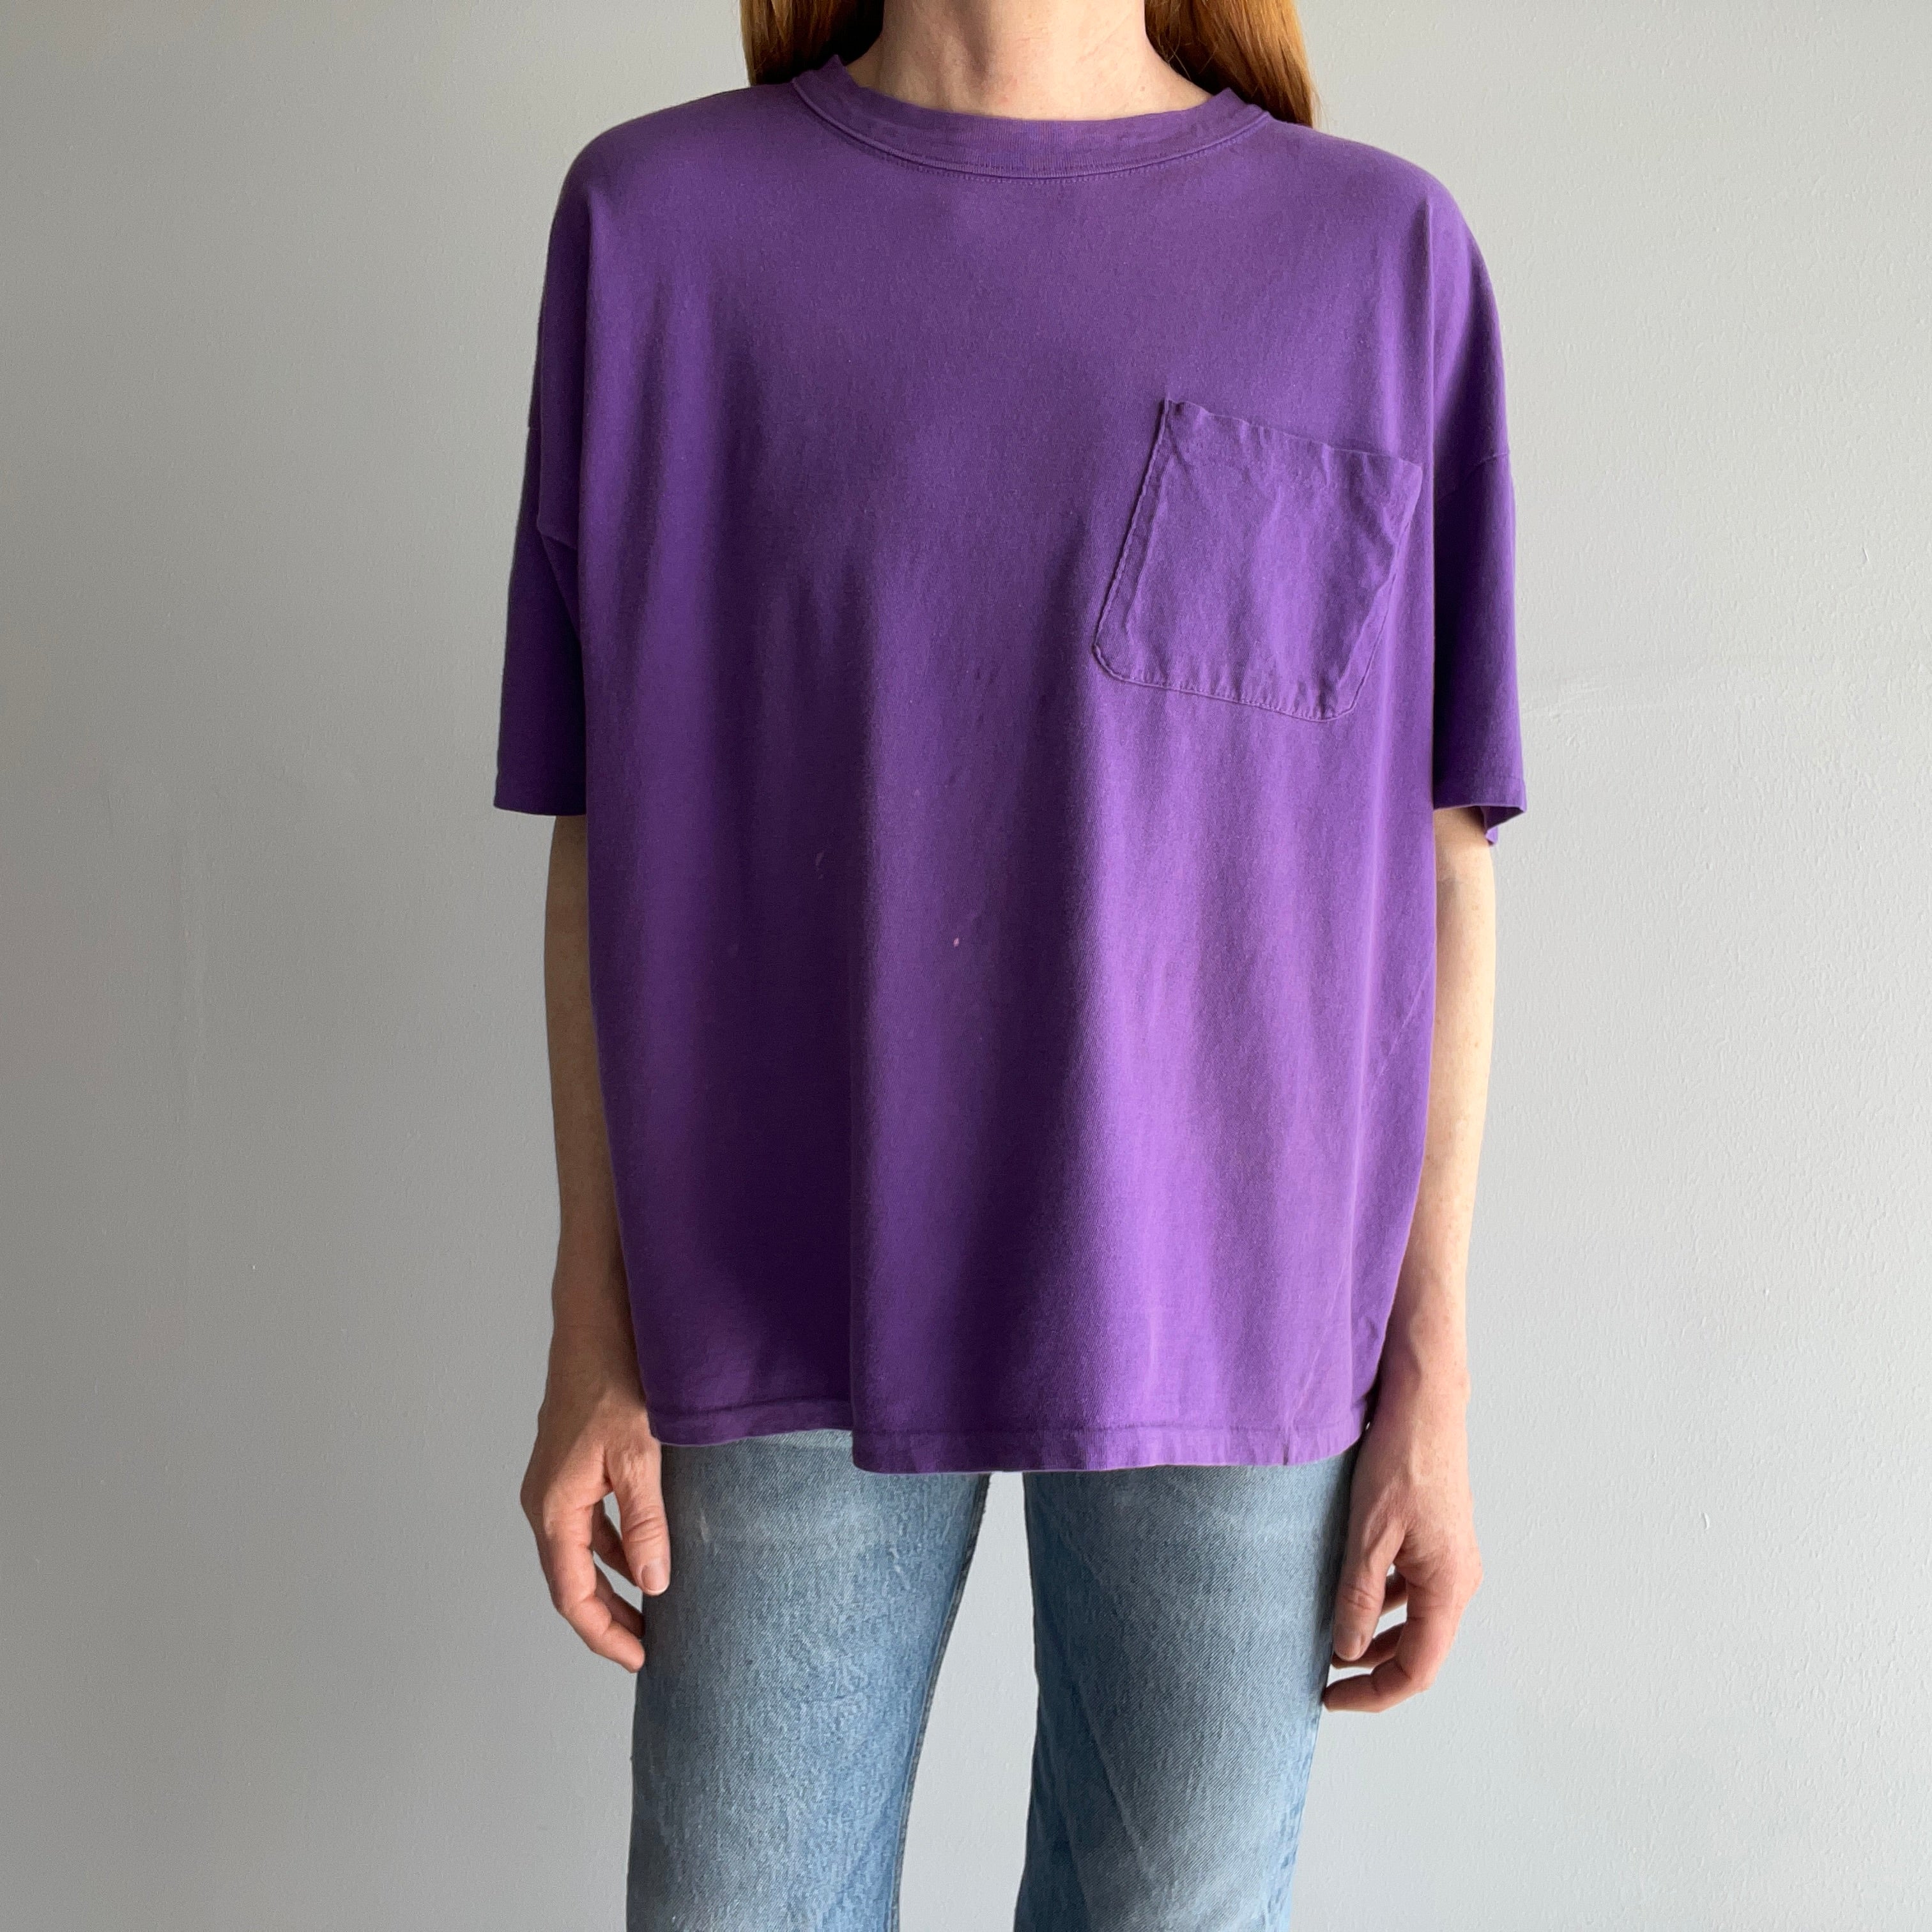 1980s Super Thin and Soft GITANo Purple Pocket T-Shirt - Easy Breezy